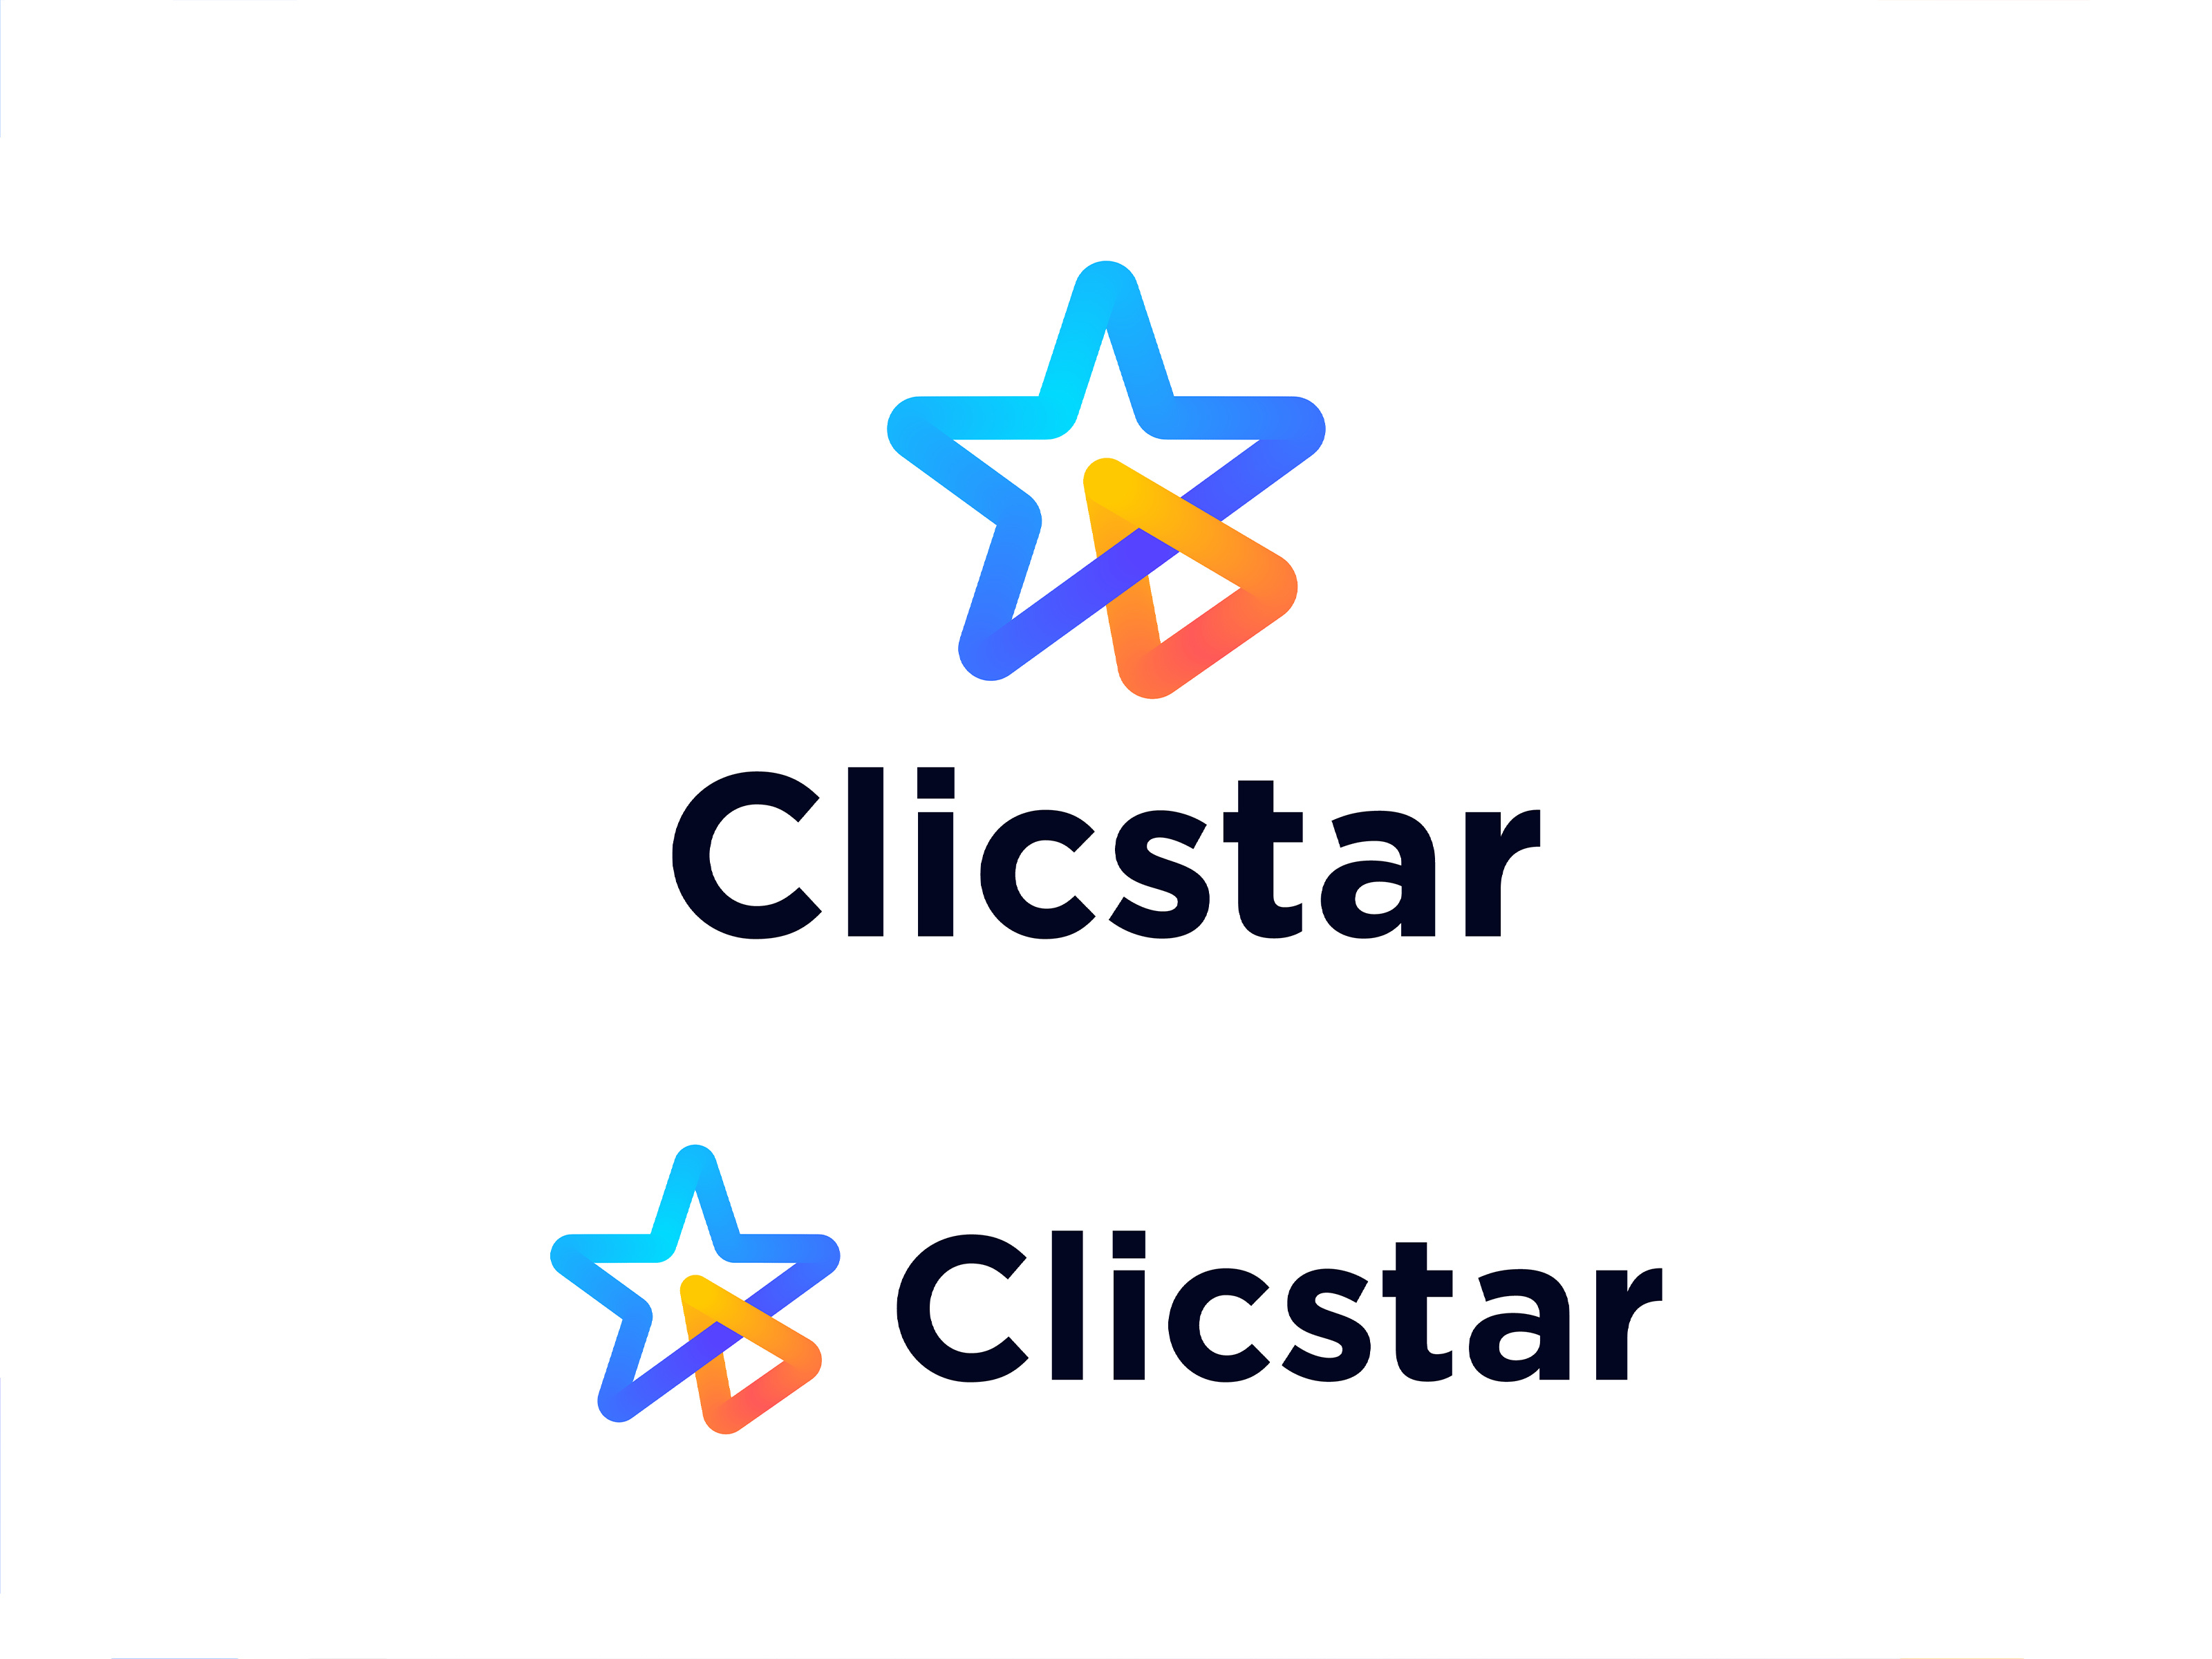 Clicstar Logo and Brand Identity Design